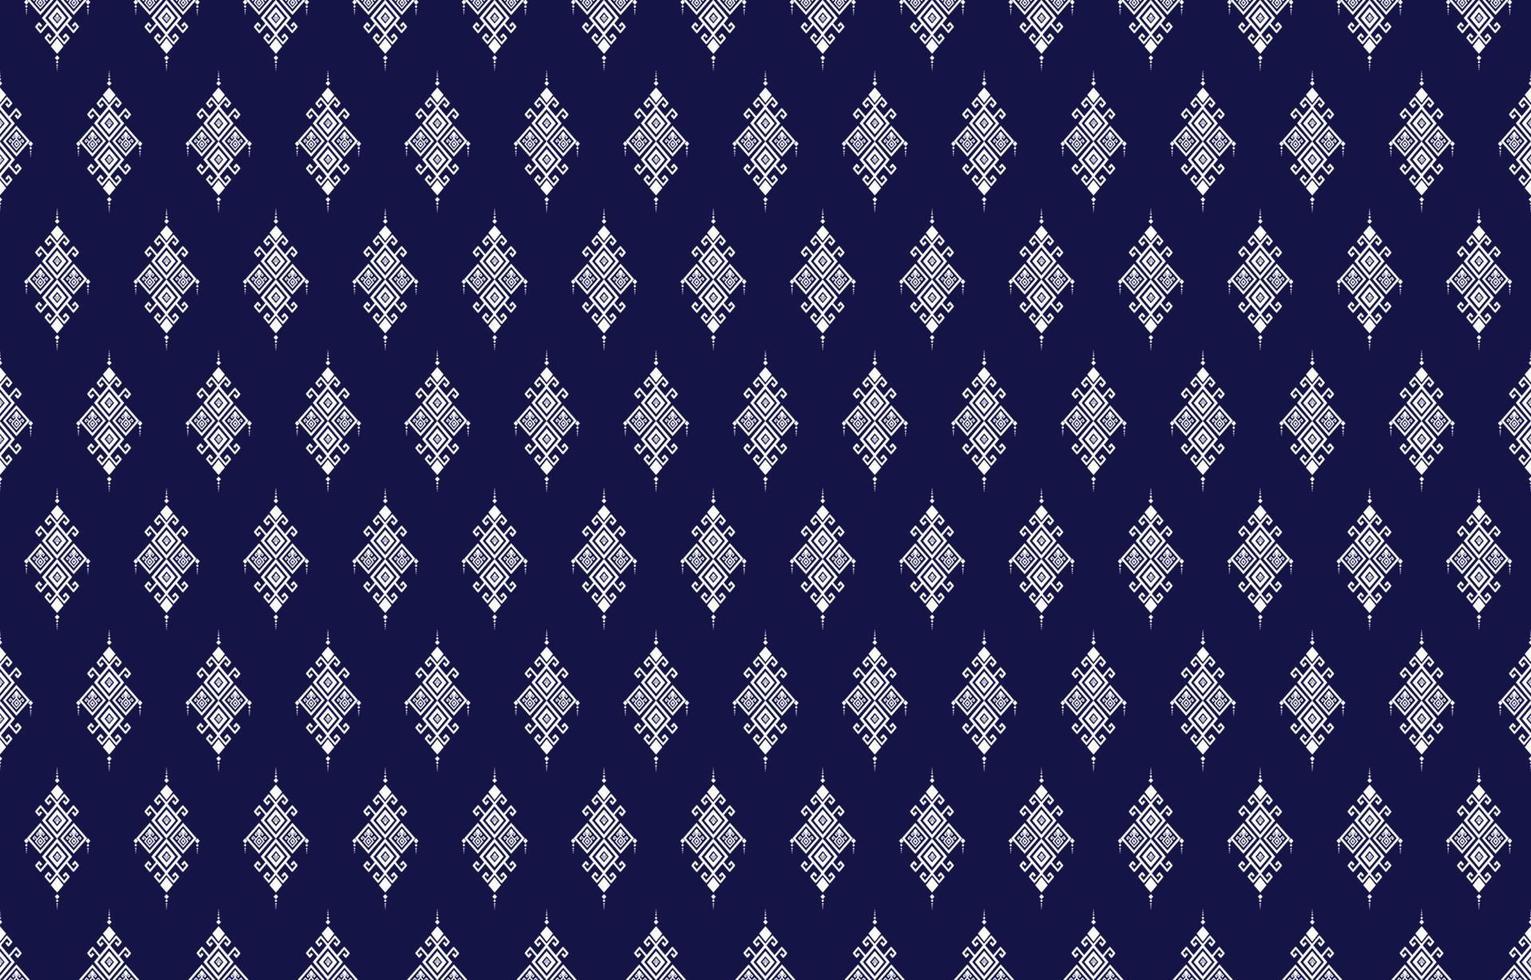 patrón étnico geométrico abstracto de dos tonos. para moqueta, papel pintado, ropa, envoltura, batik, tela, azulejo, telón de fondo, ilustración vectorial. estilo de patrón vector